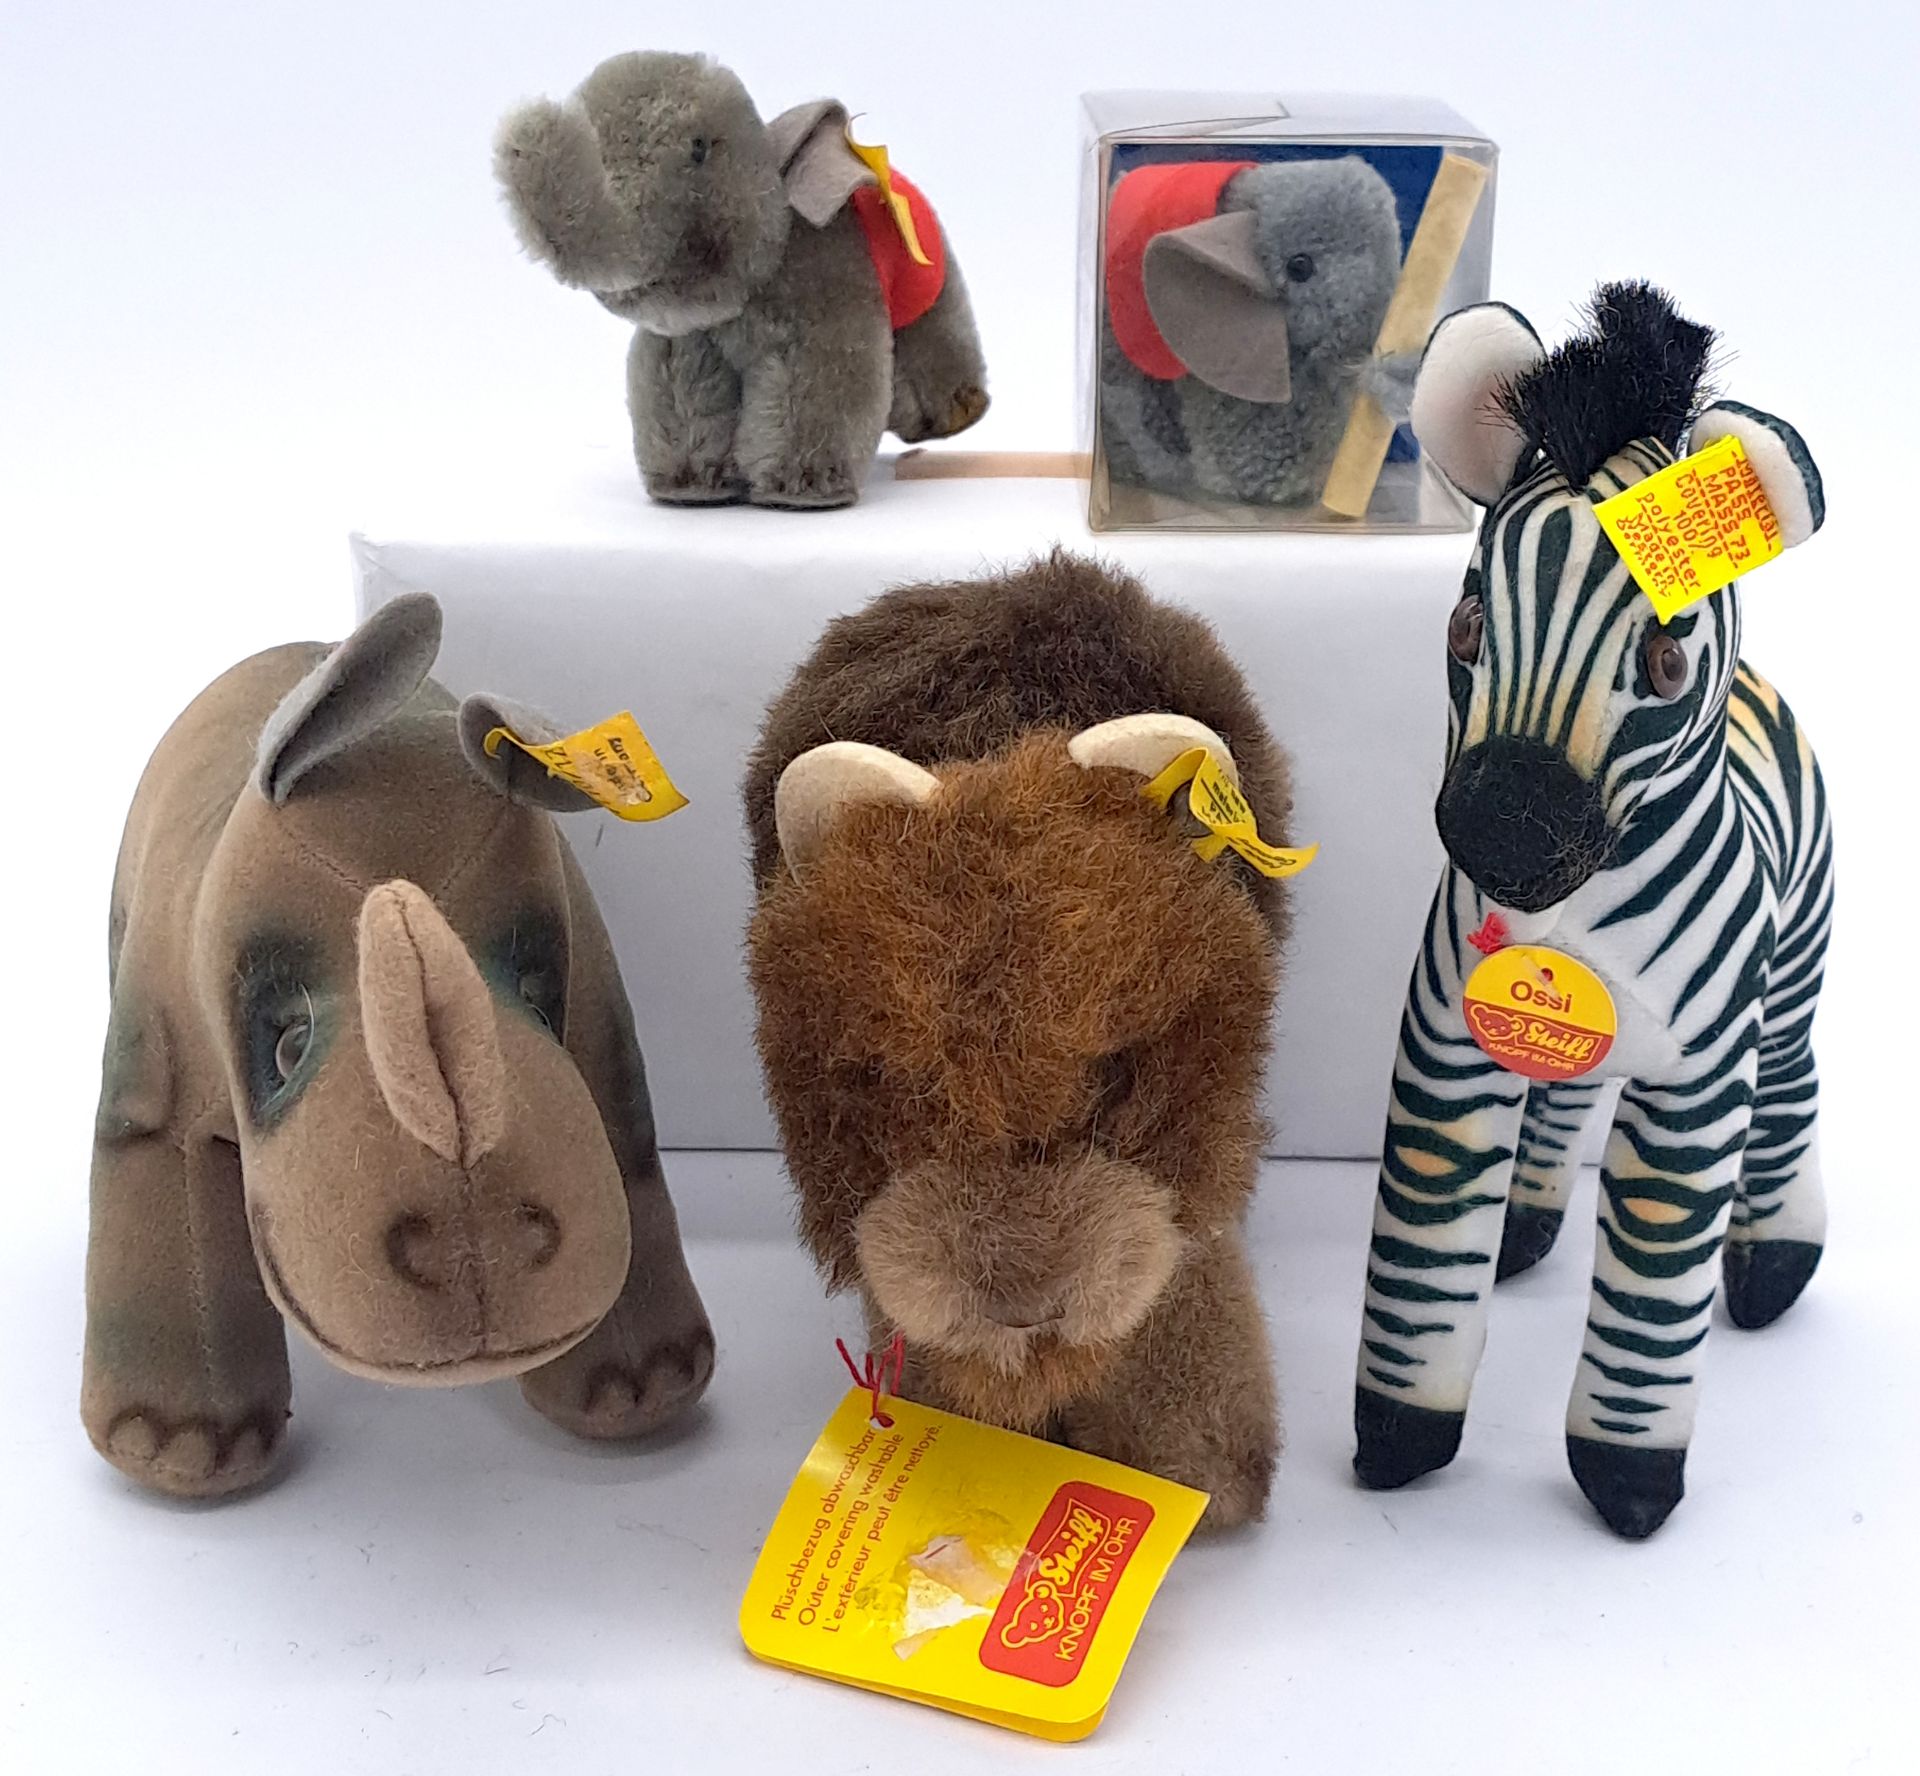 Steiff assortment including Nosy Rhinoceros and Ossi Zebra